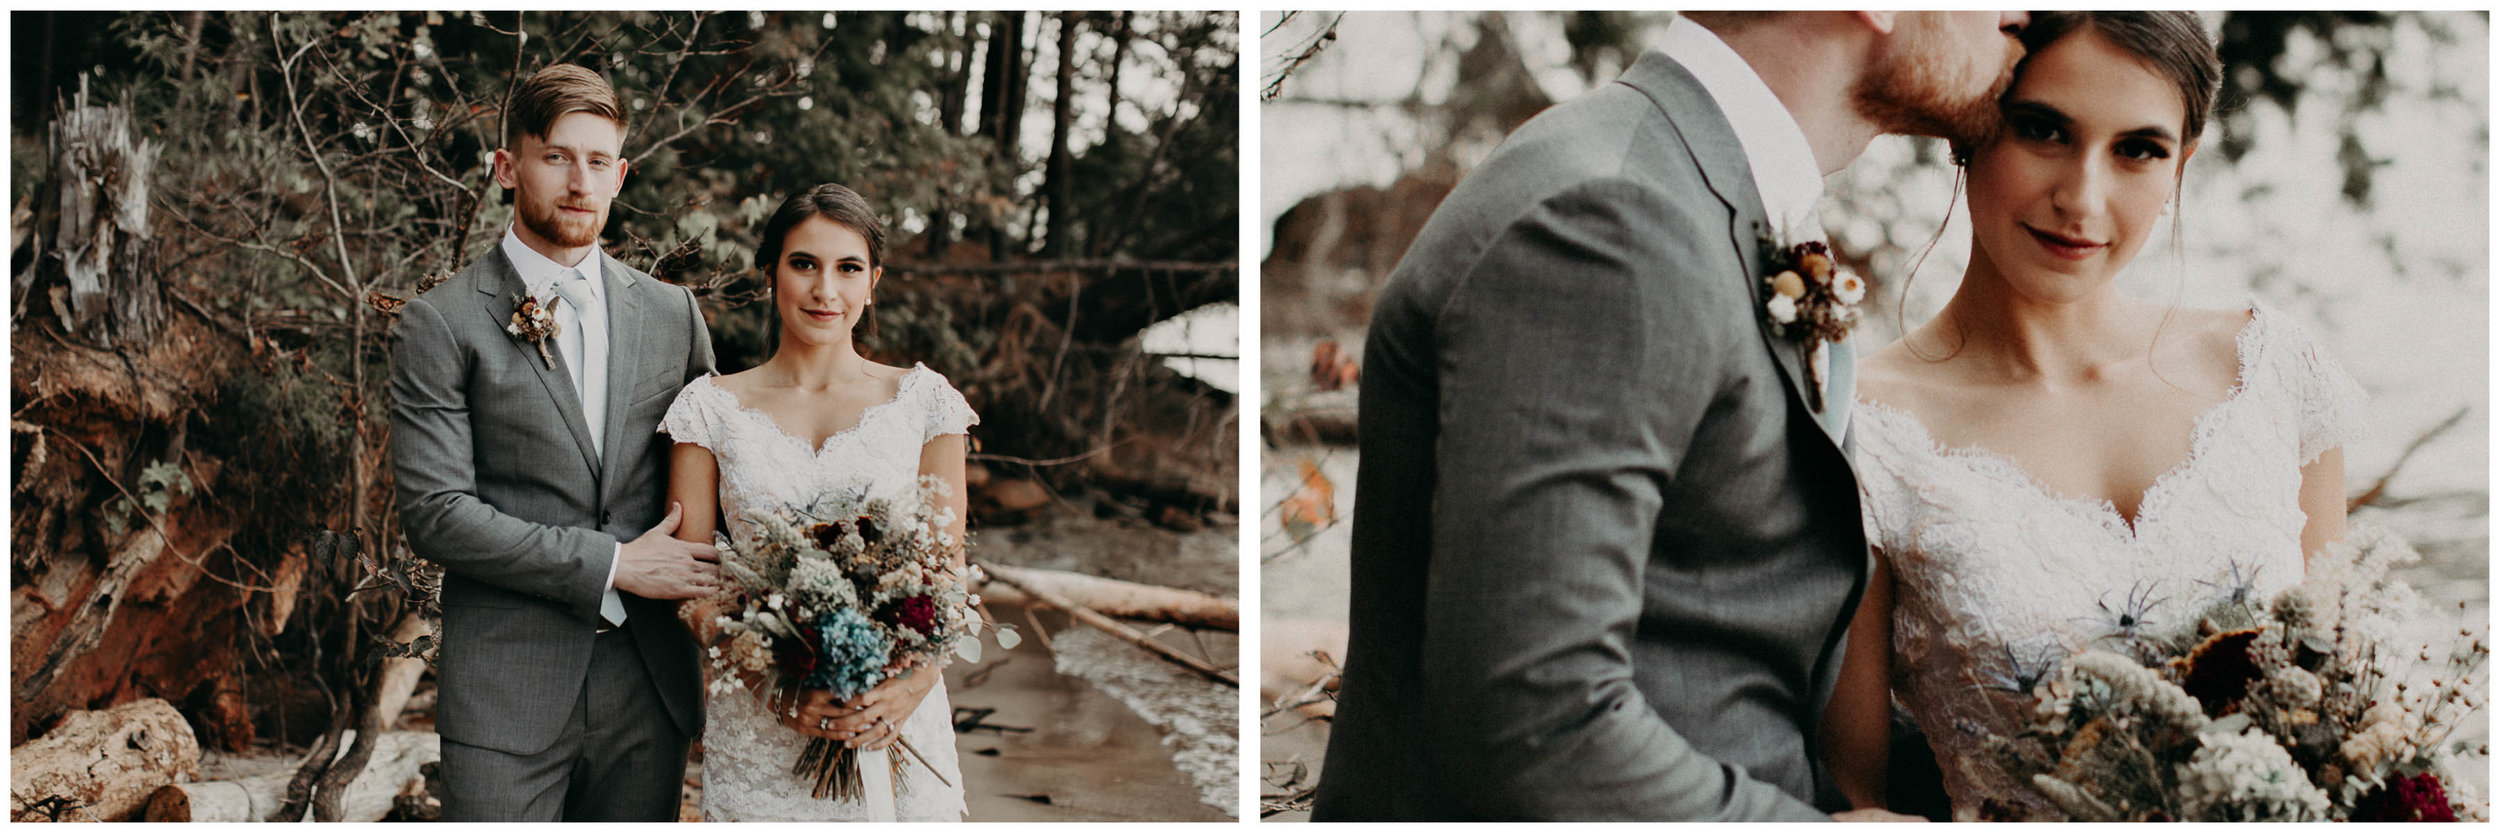 59  Bride & Groom Portraits before the ceremony on wedding day - Atlanta Wedding Photographer .jpg